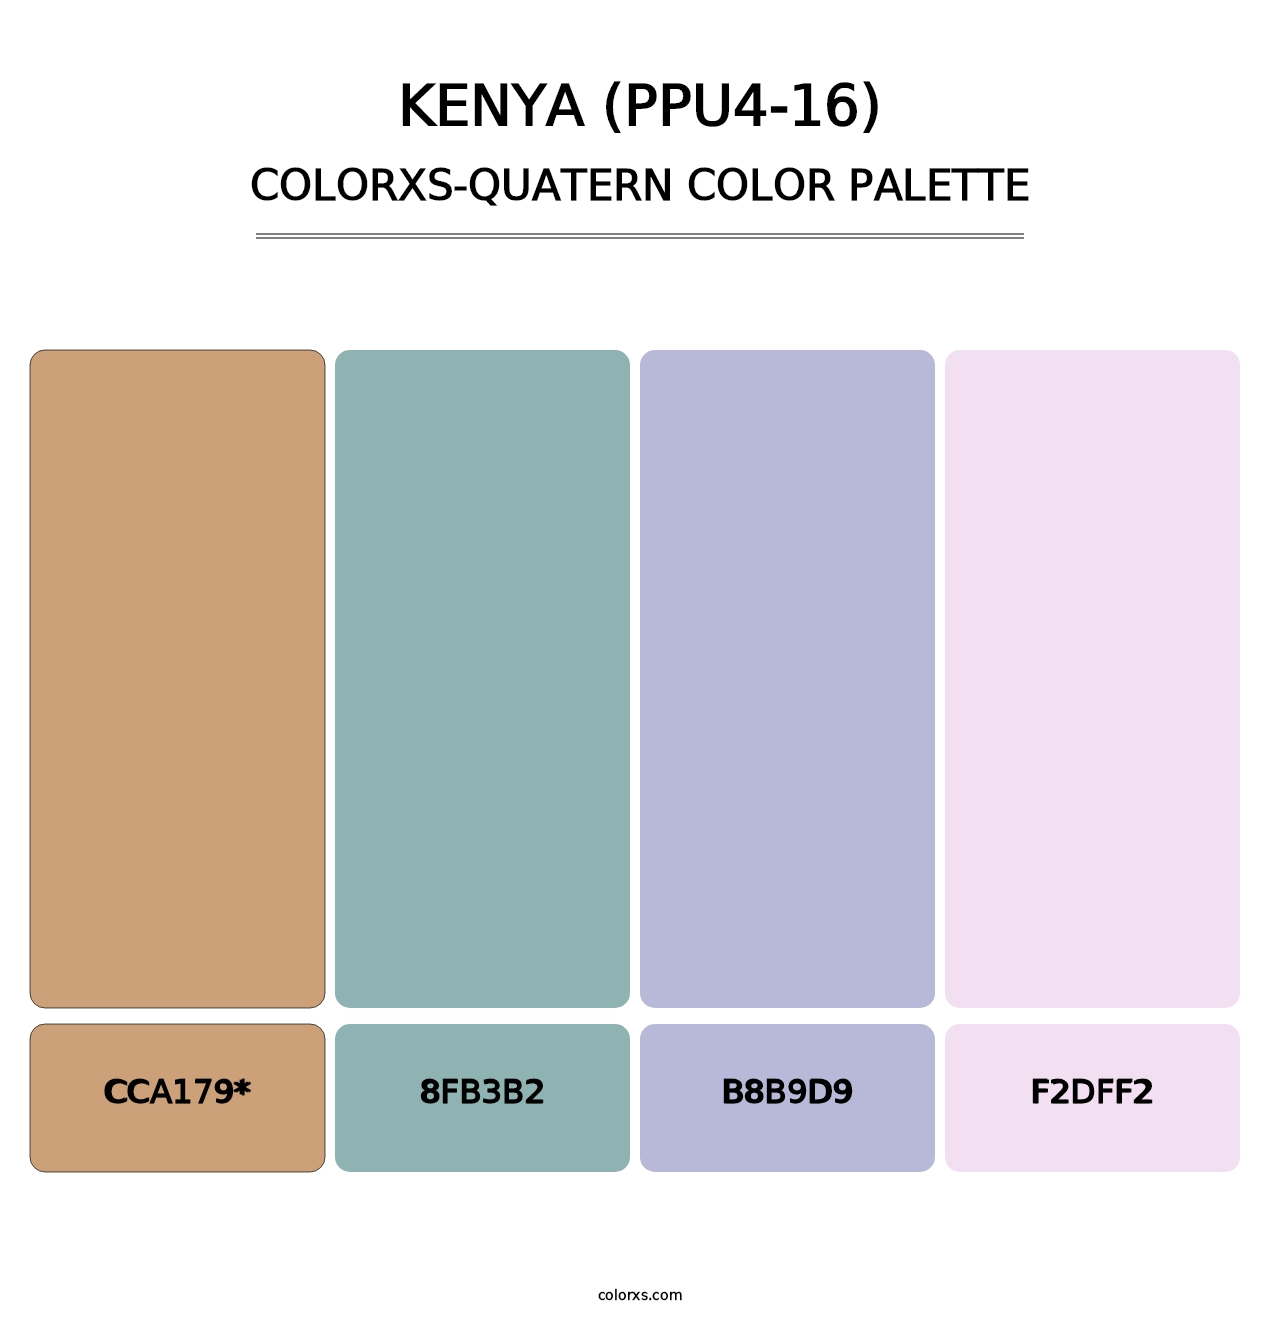 Kenya (PPU4-16) - Colorxs Quatern Palette